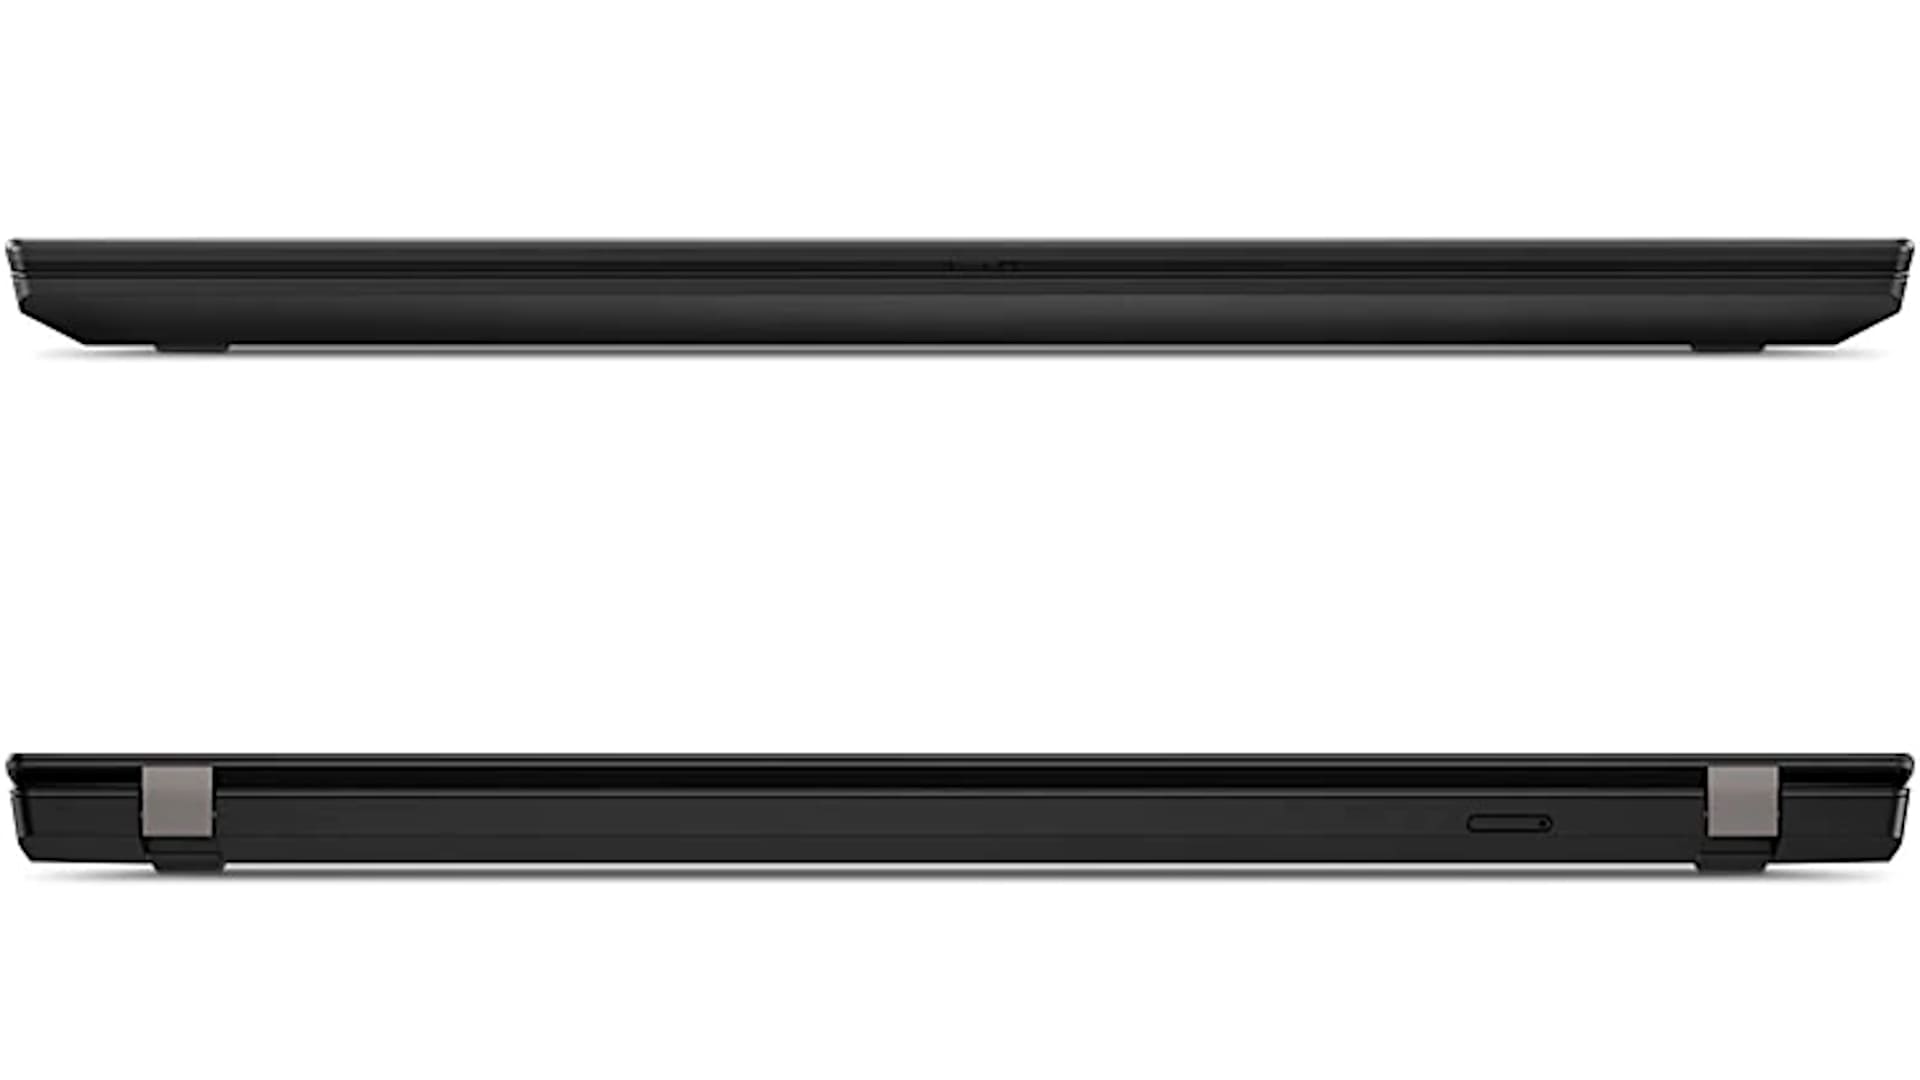 Lenovo ThinkPad T490 Front and Back